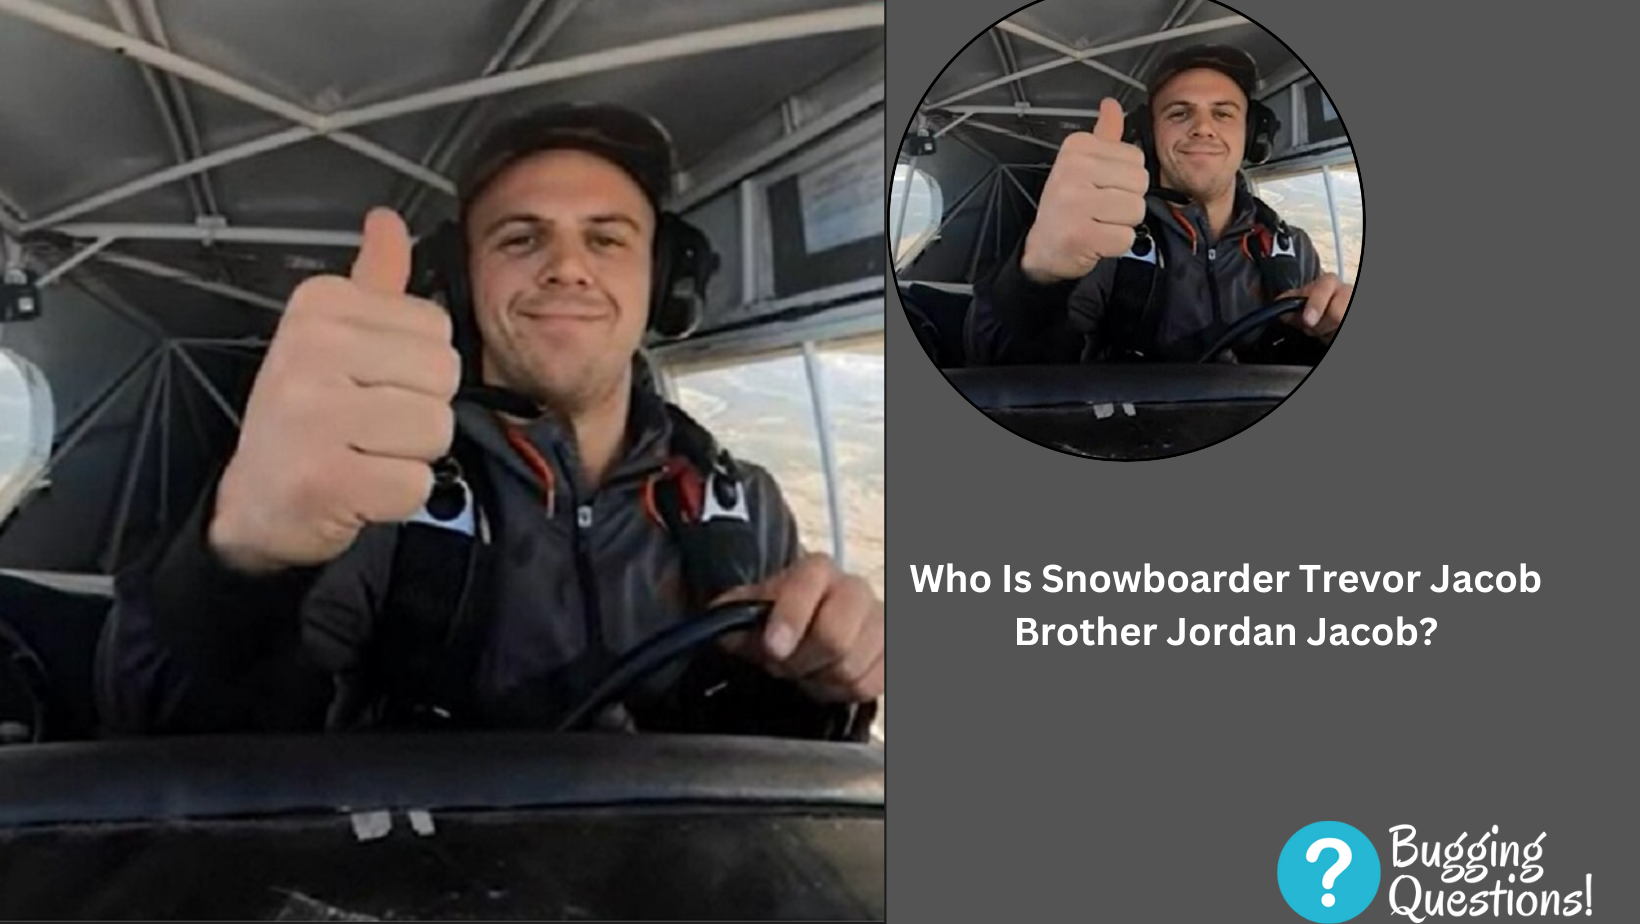 Who Is Snowboarder Trevor Jacob Brother Jordan Jacob?